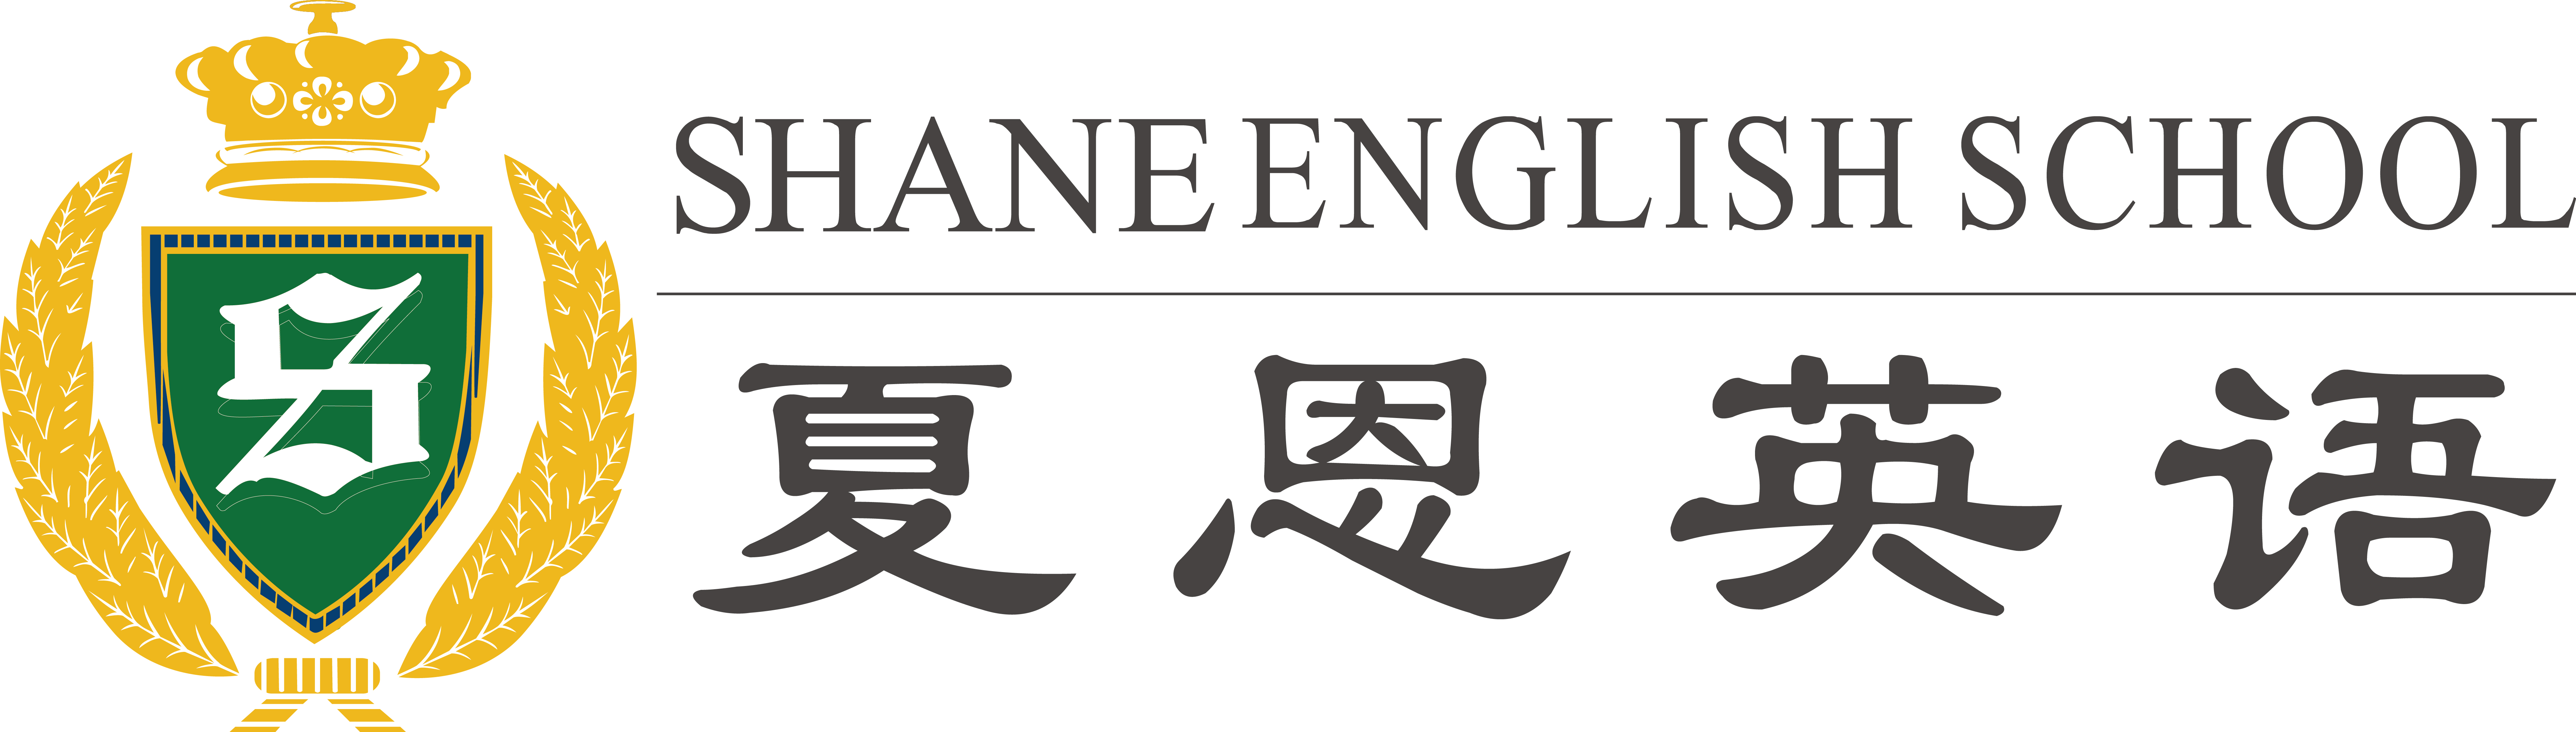 Shane English Schools Changzhou - banner